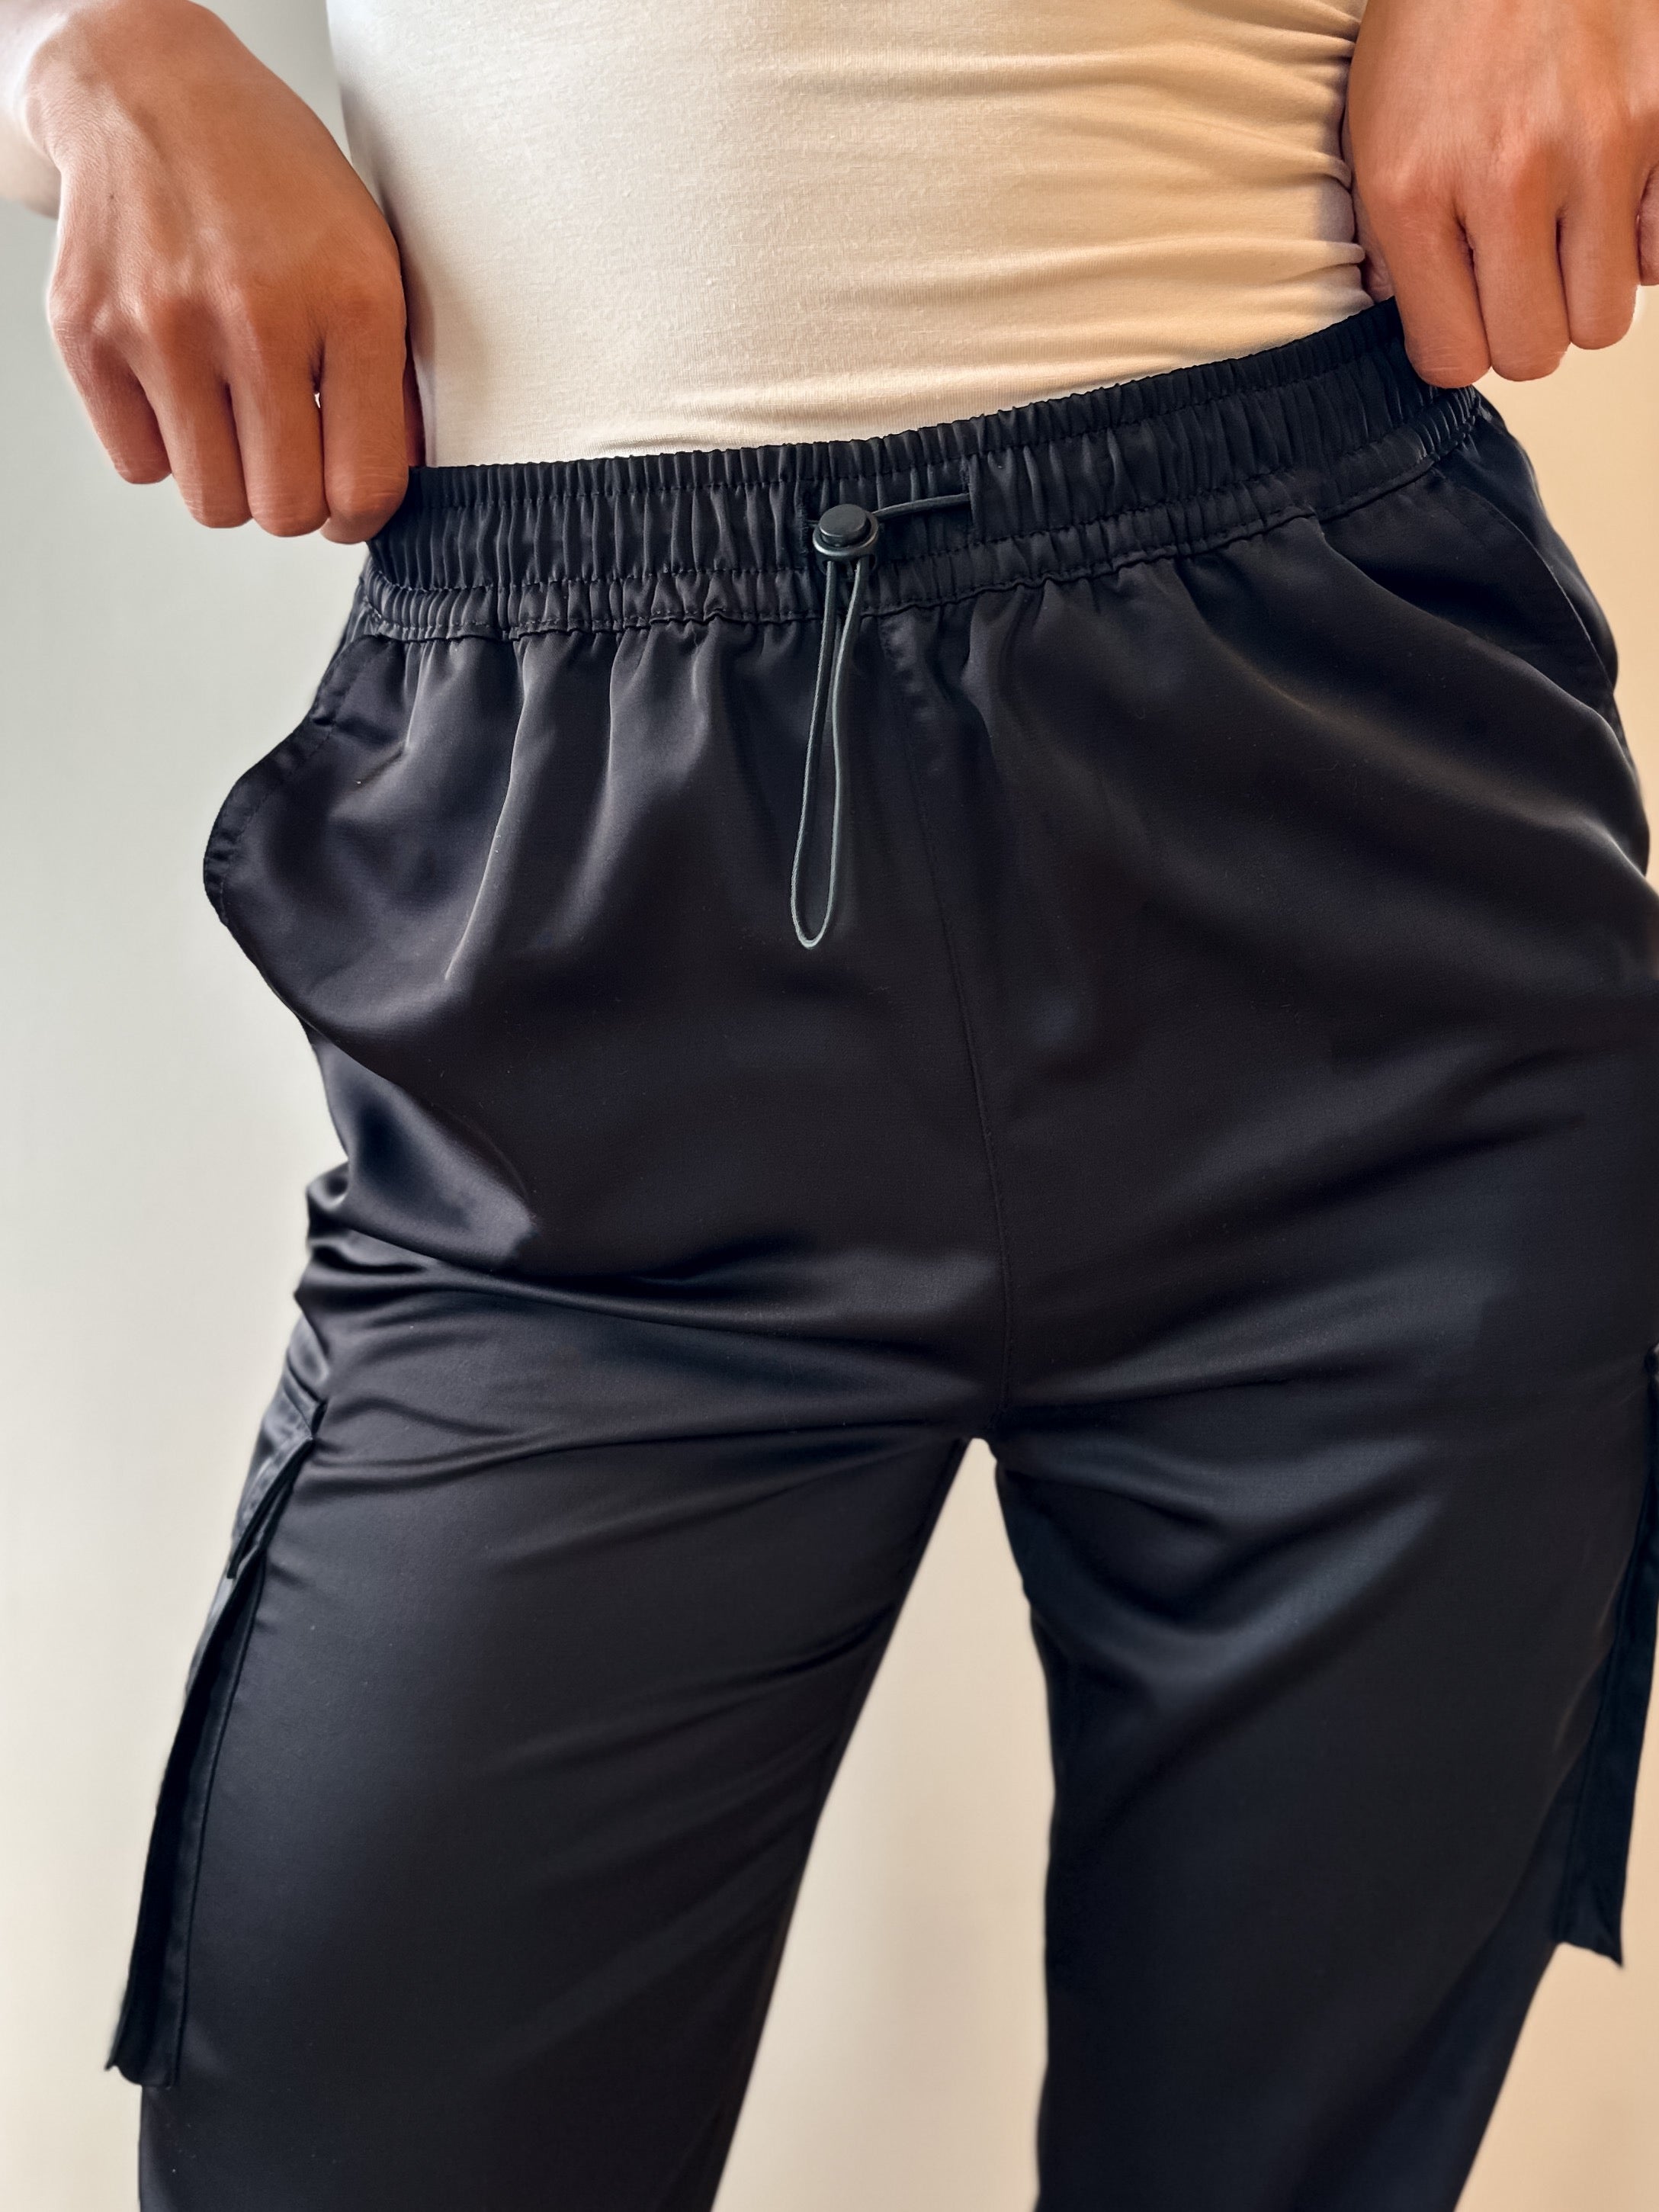 black satin drawstring joggers with elastic waistband